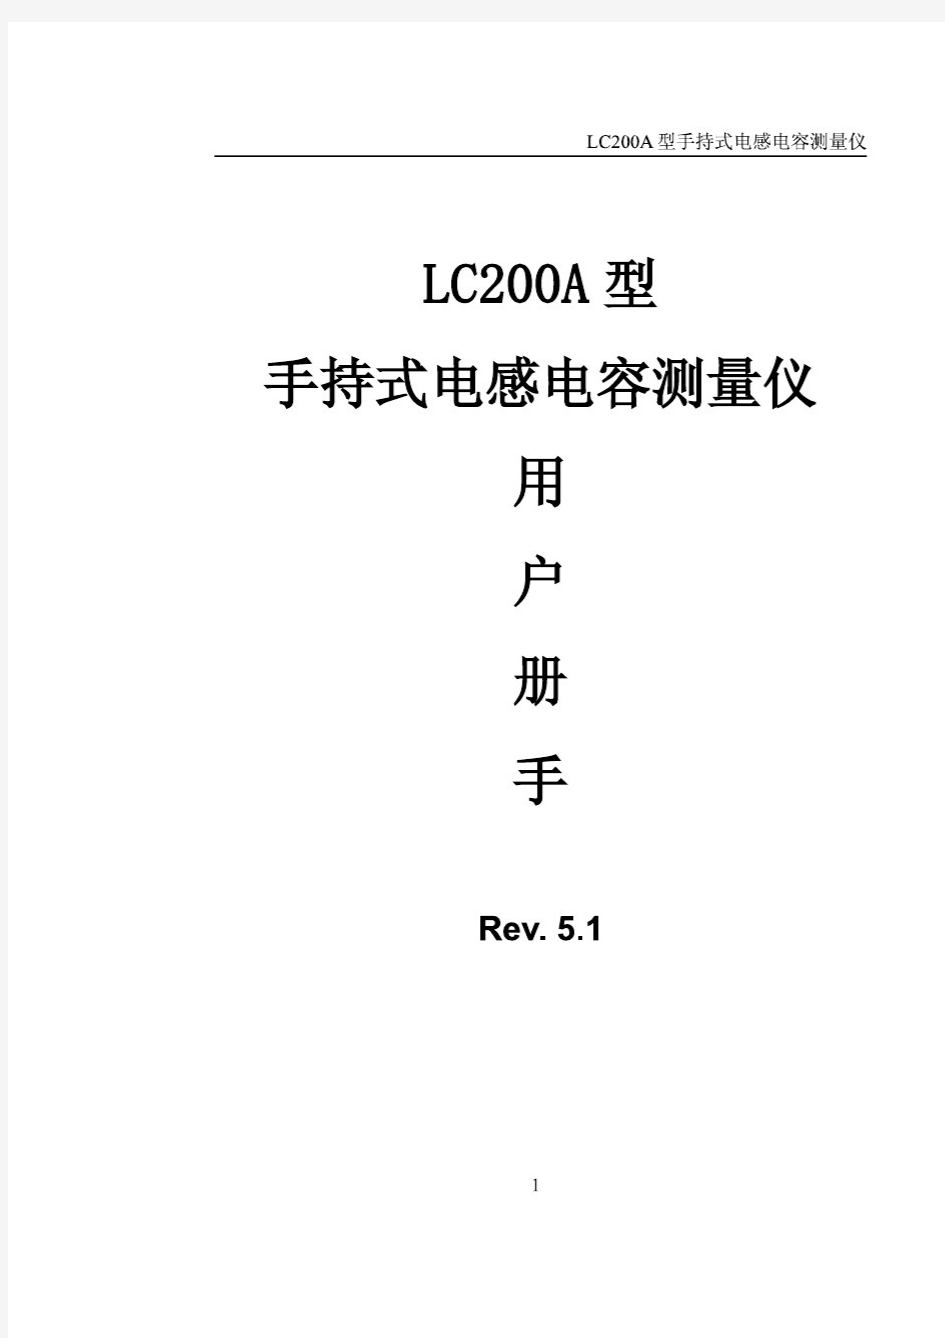 LC200A型手持式电感电容测量仪说明书